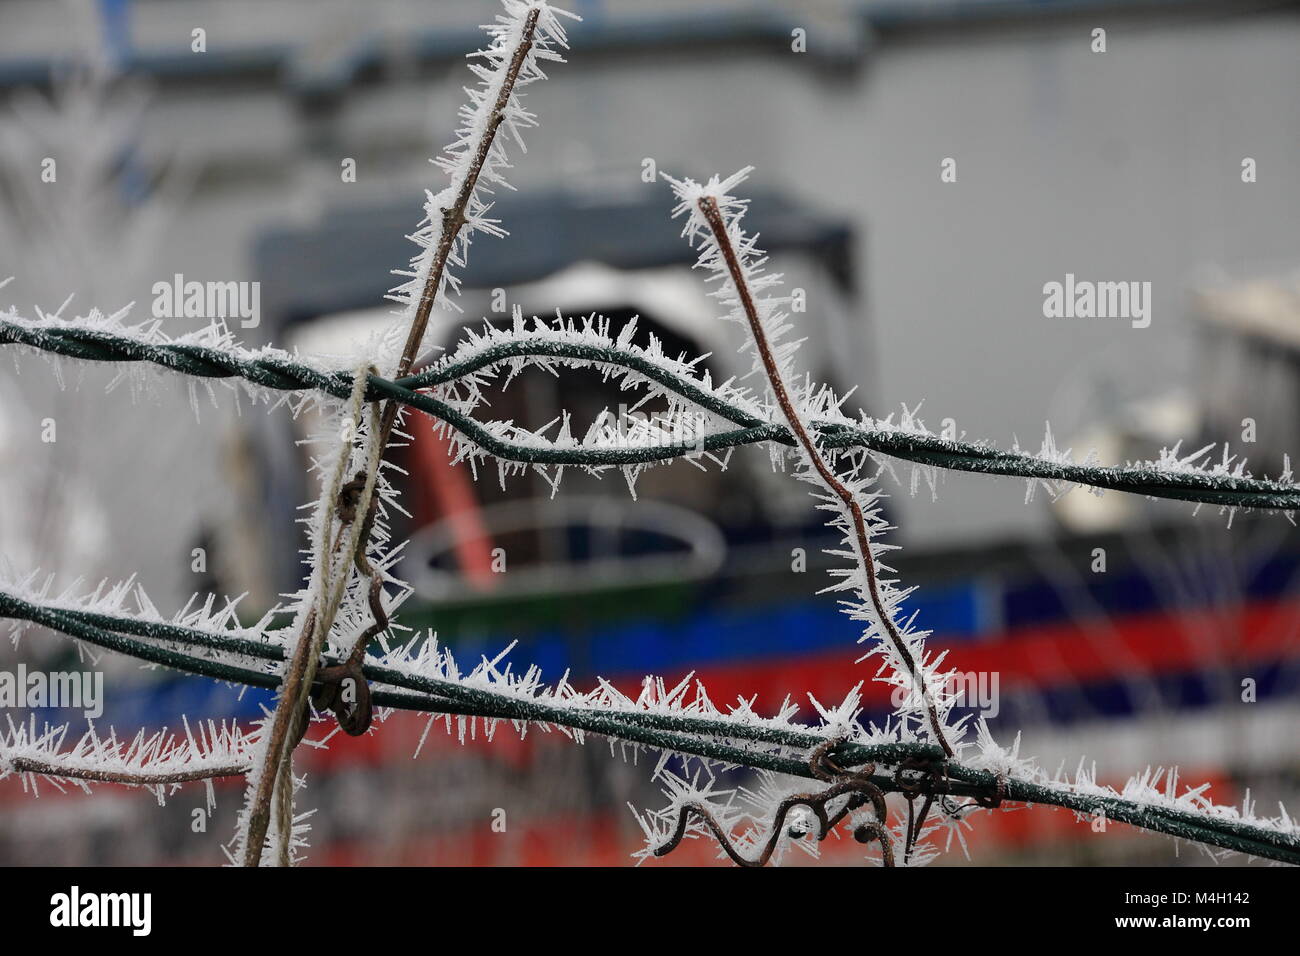 Ice needles at a fence Stock Photo